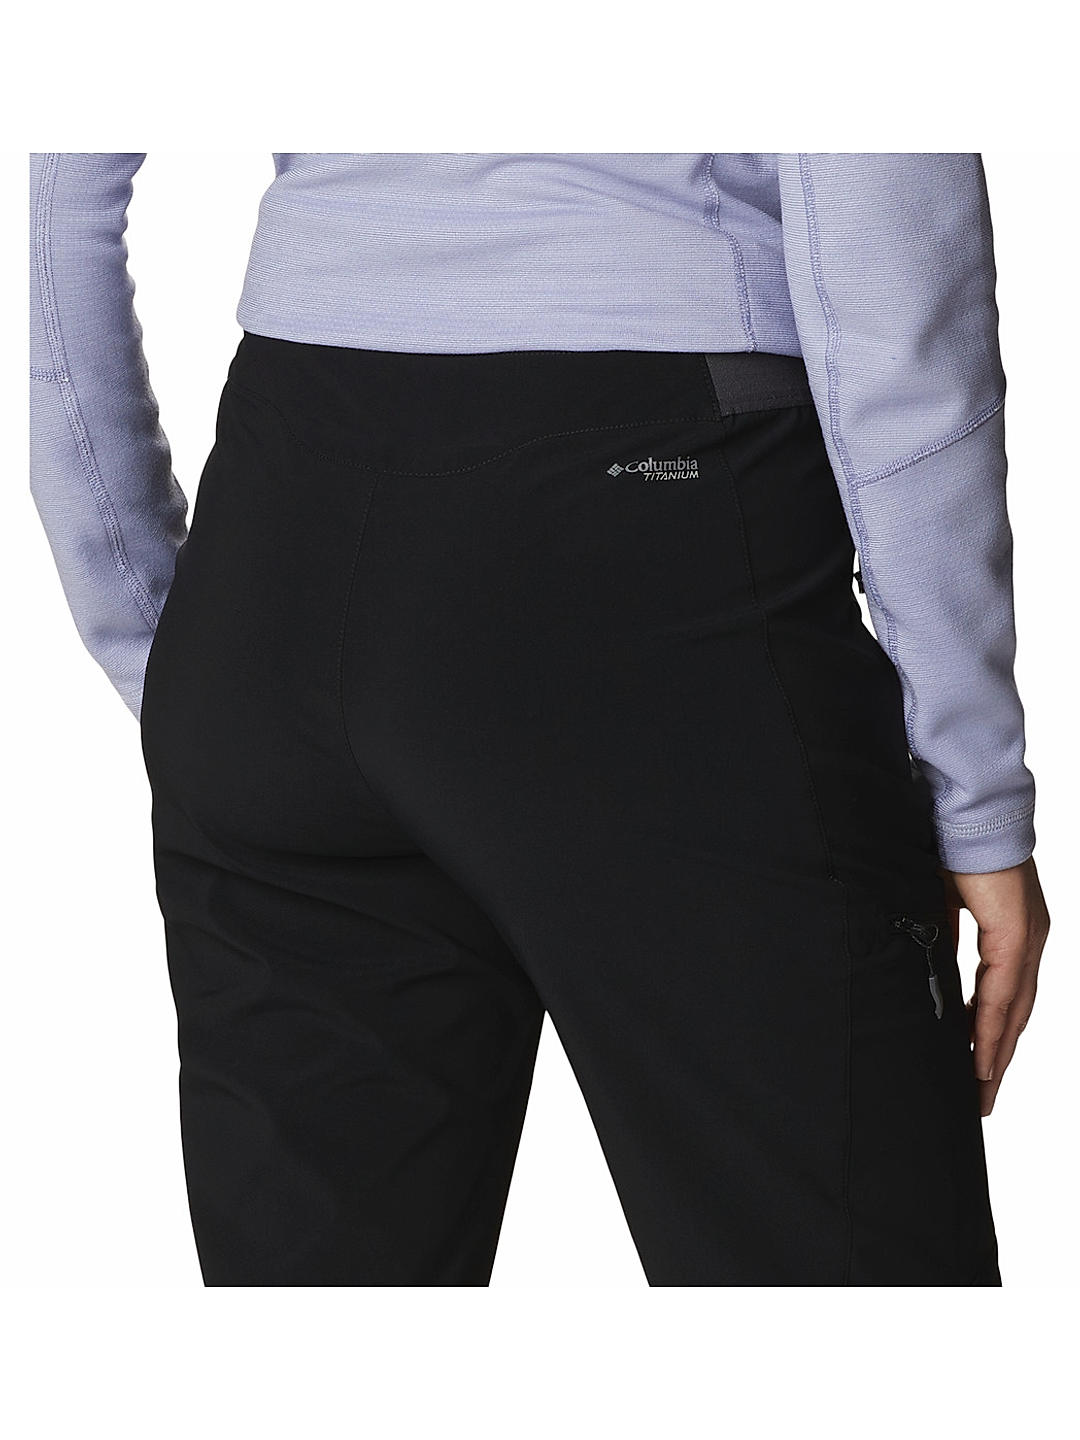 Columbia Sportswear Co Titanium Pants Size M OmniTech NWOT  eBay